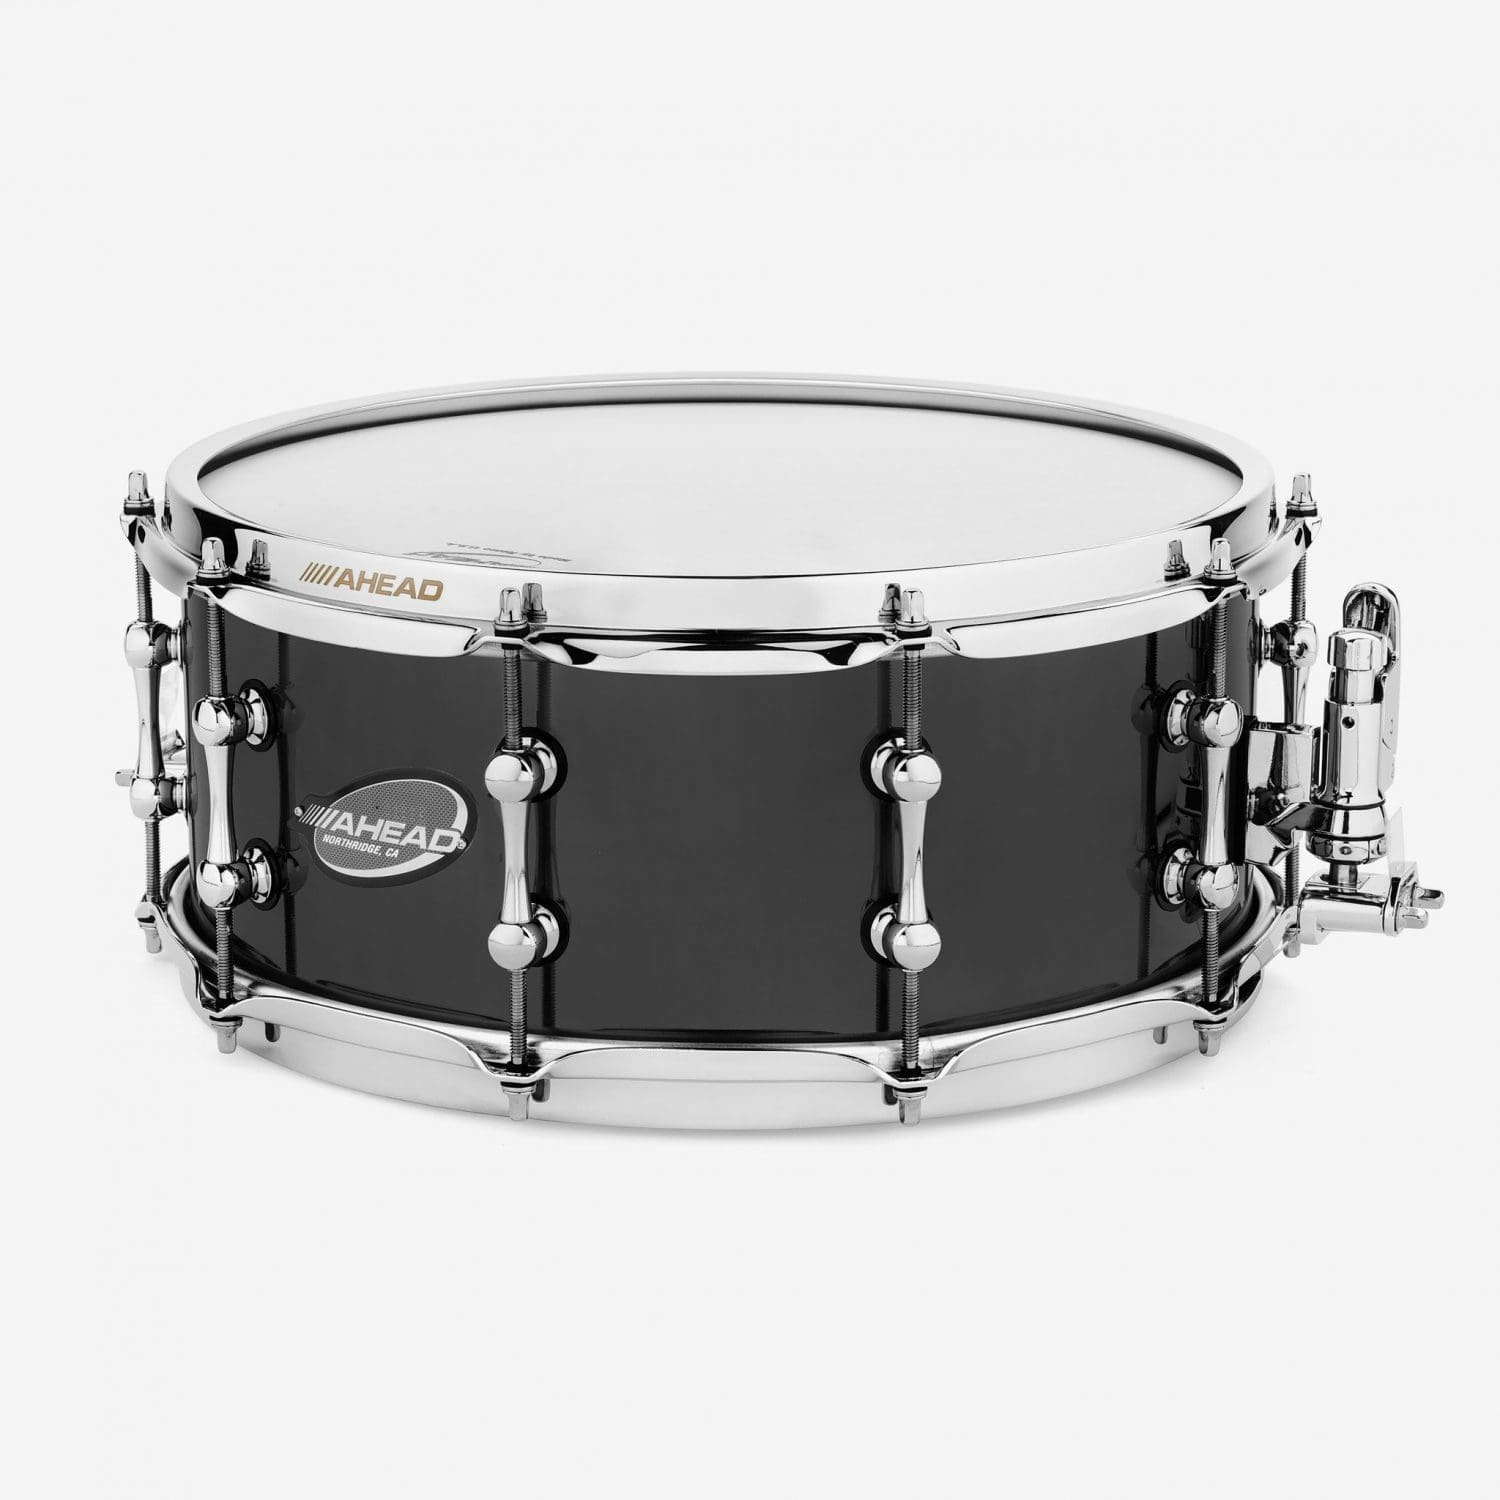 6 x 14 inch Black Chrome on Brass Snare Drum